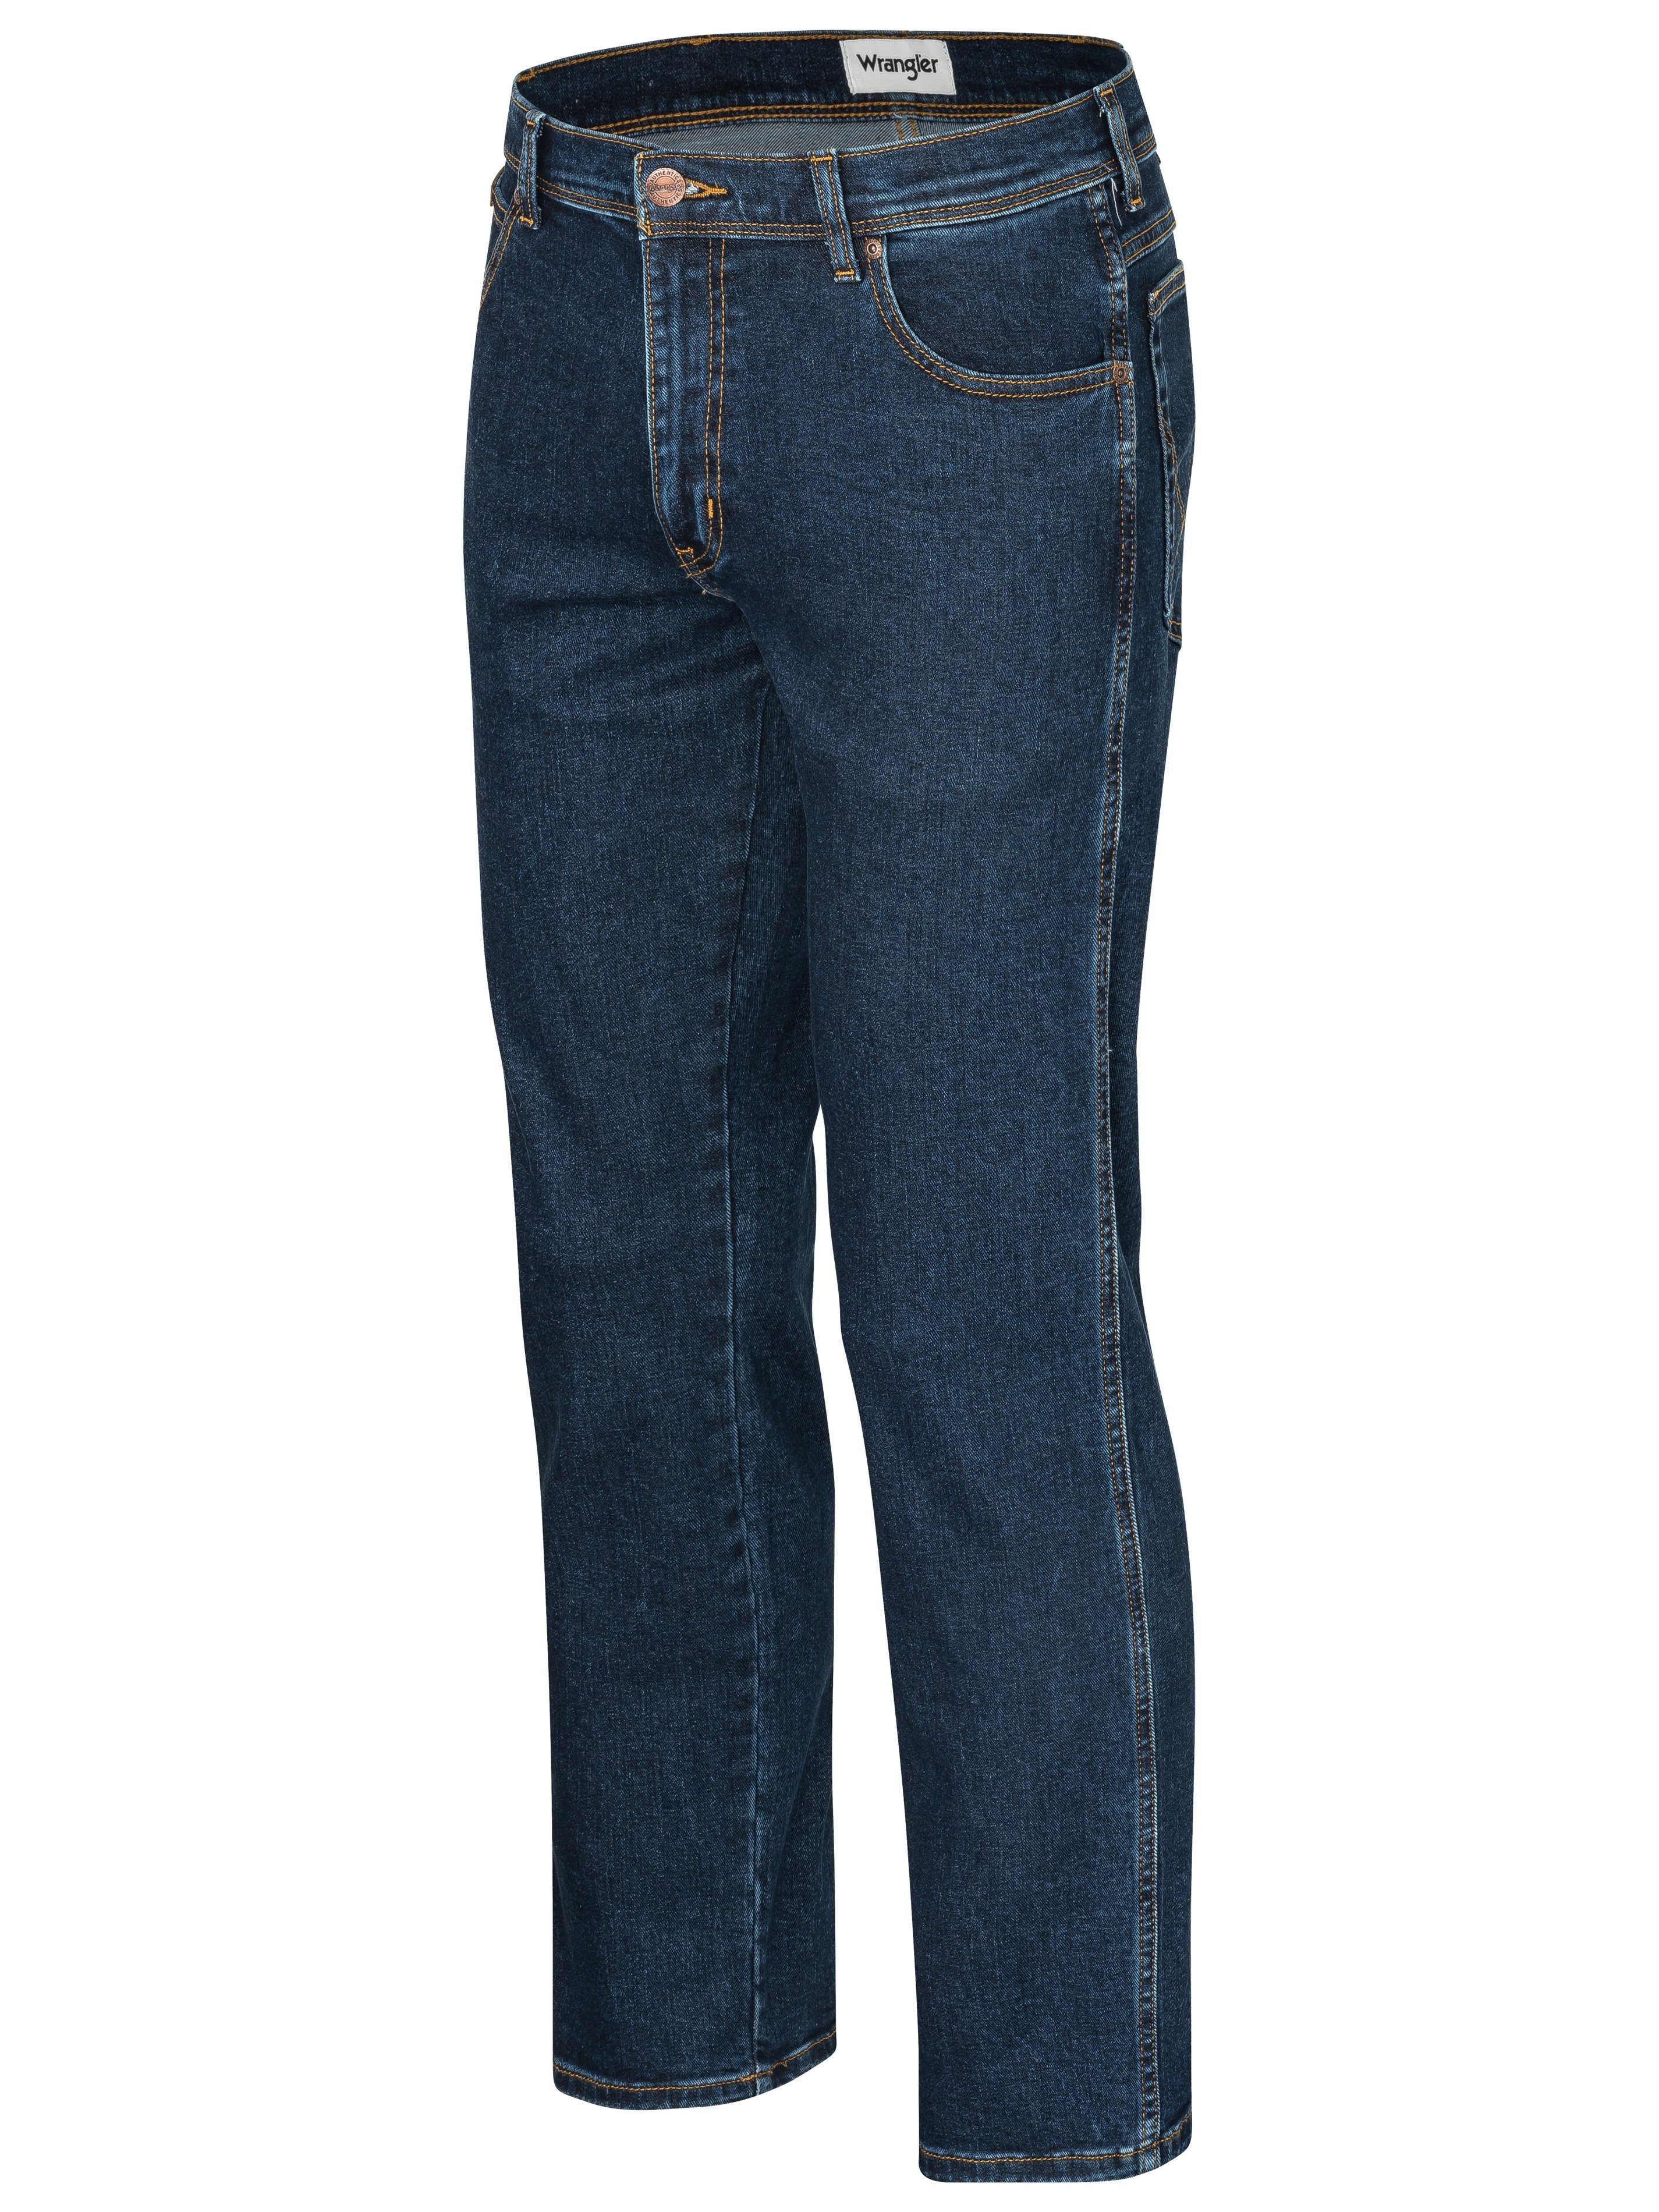 Stretch schwarzer Jeans Gürtel Authentic Wrangler Darkstone Straight mit Straight-Jeans Gürtel Herrenjeans Texas +